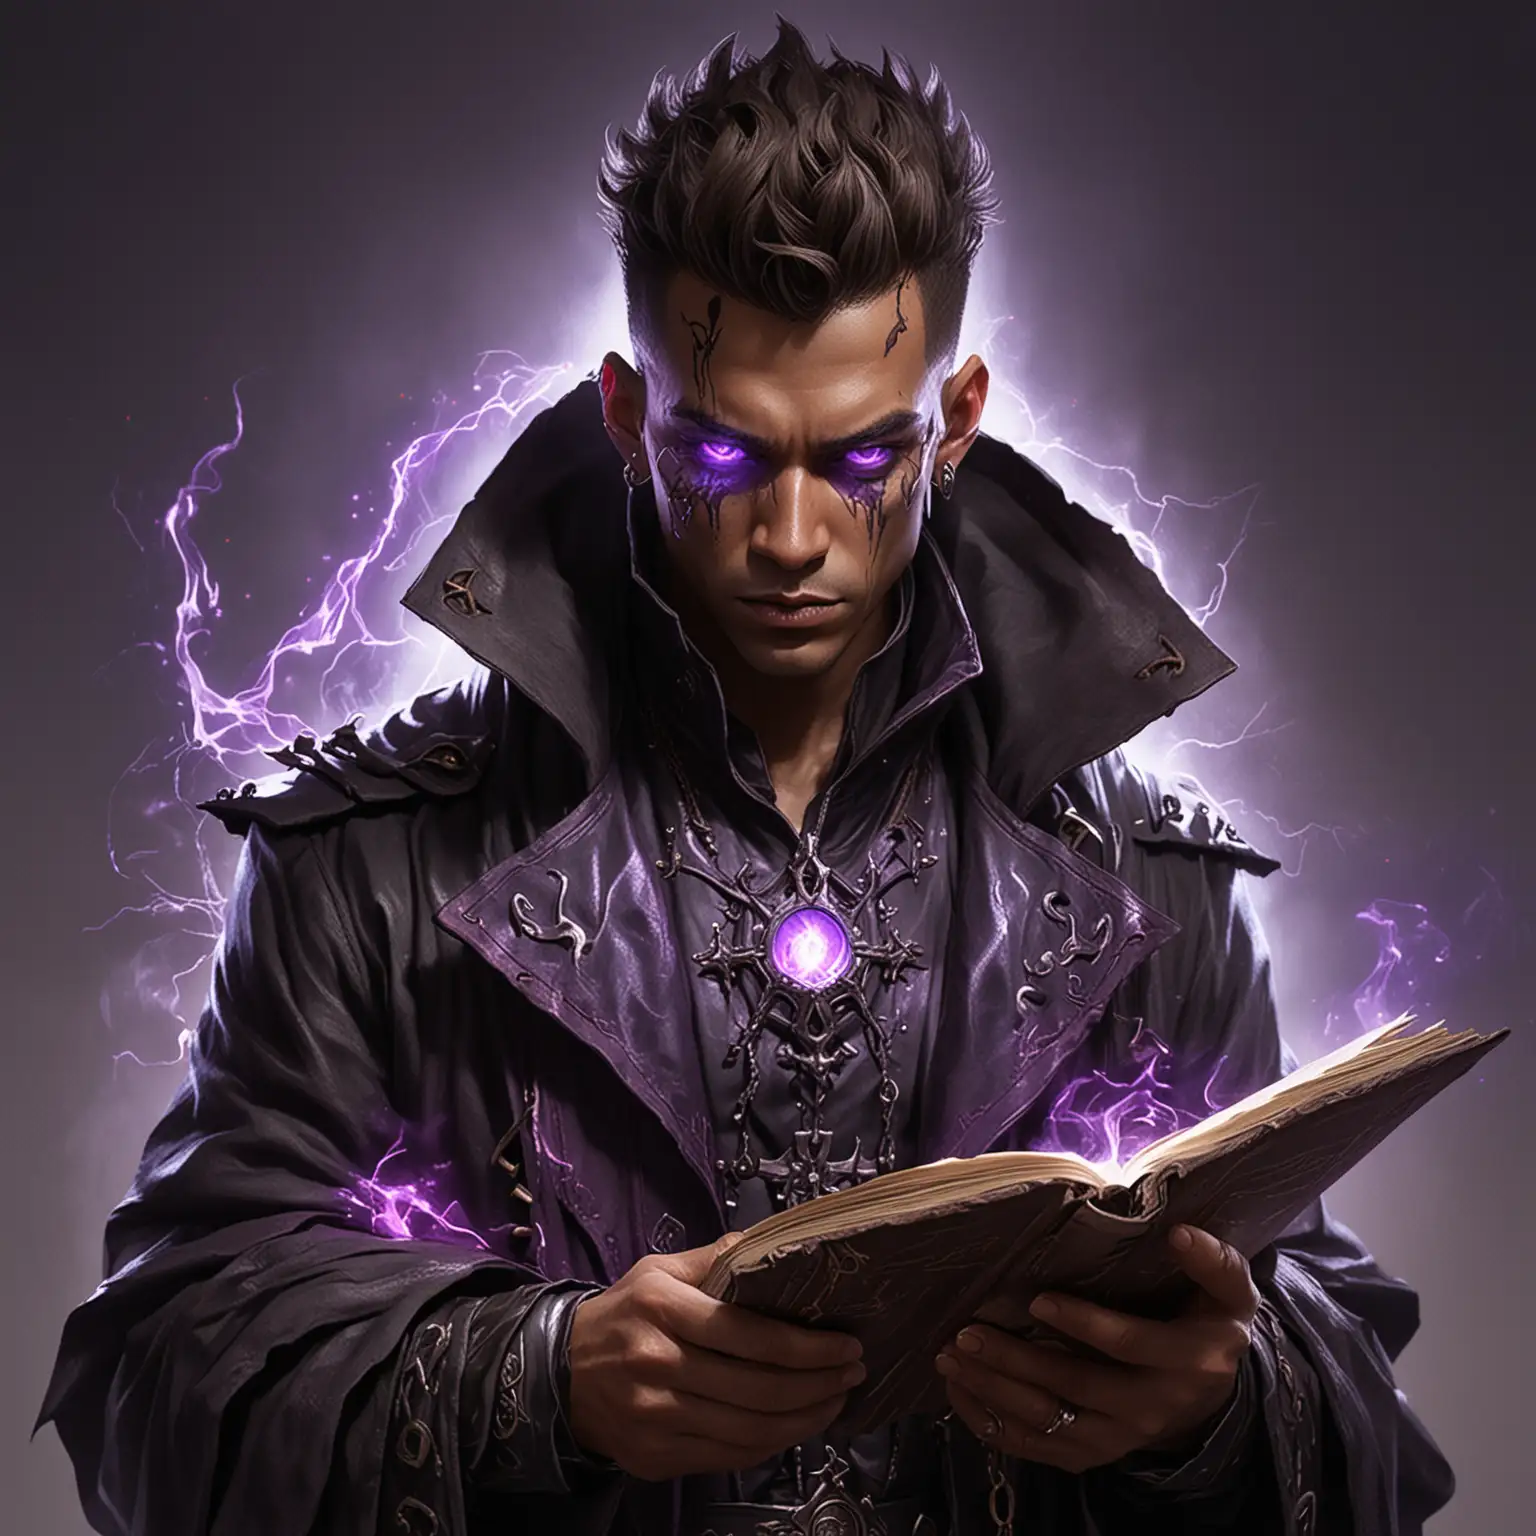 Dark Fantasy Necromancer with Glowing Eye and Spellbook